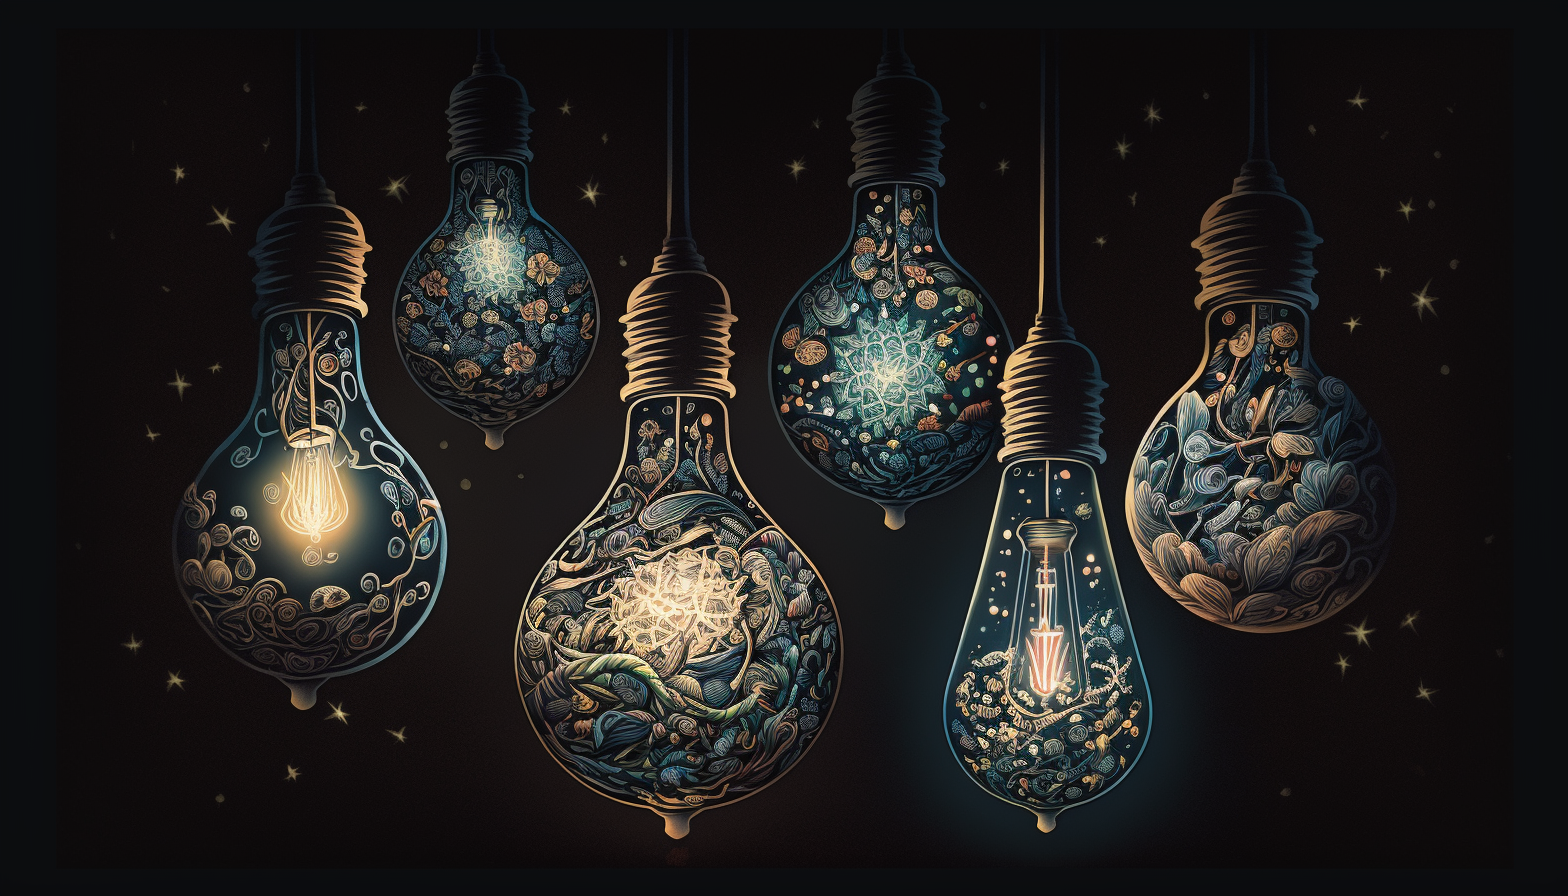 An illustration of five intricate lightbulbs